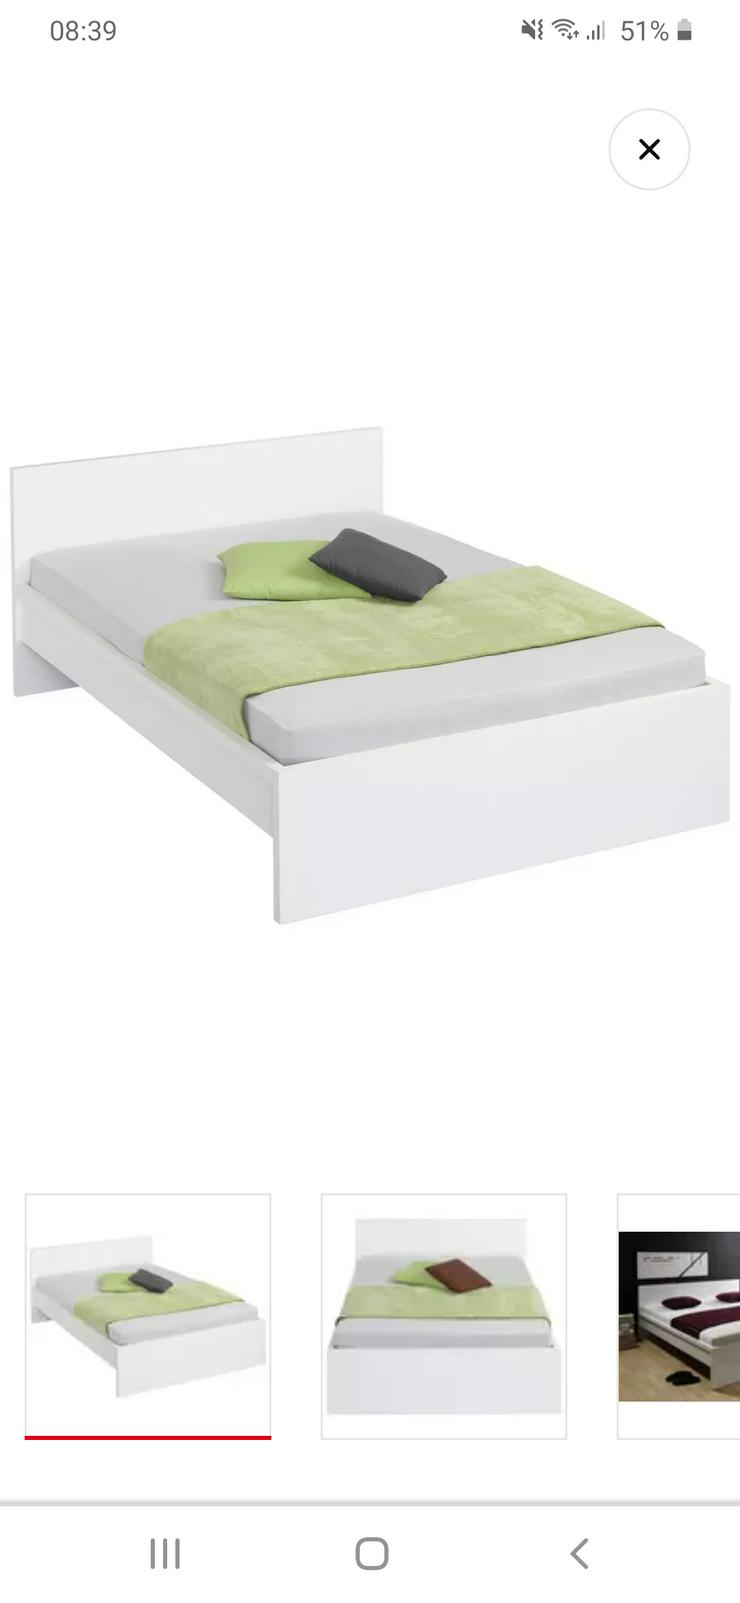 Bild 2: Bett 140×200 inkl. Lattenrost und Matratze 